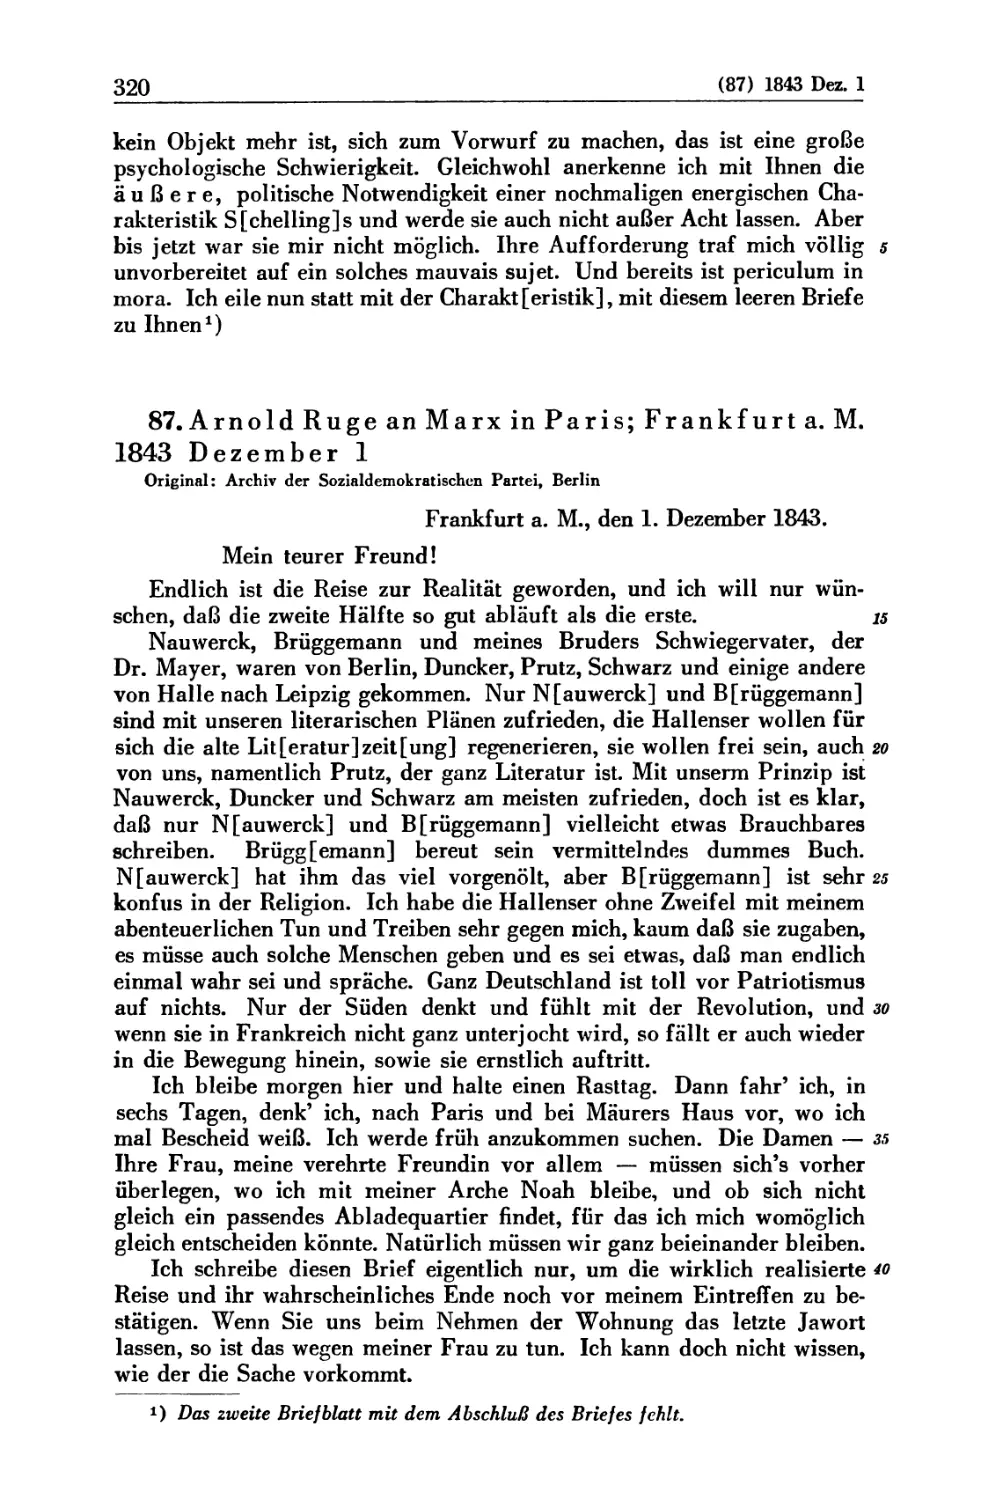 87. Arnold Ruge an Marx in Paris; Frankfurt a. M. 1843 Dezember 1